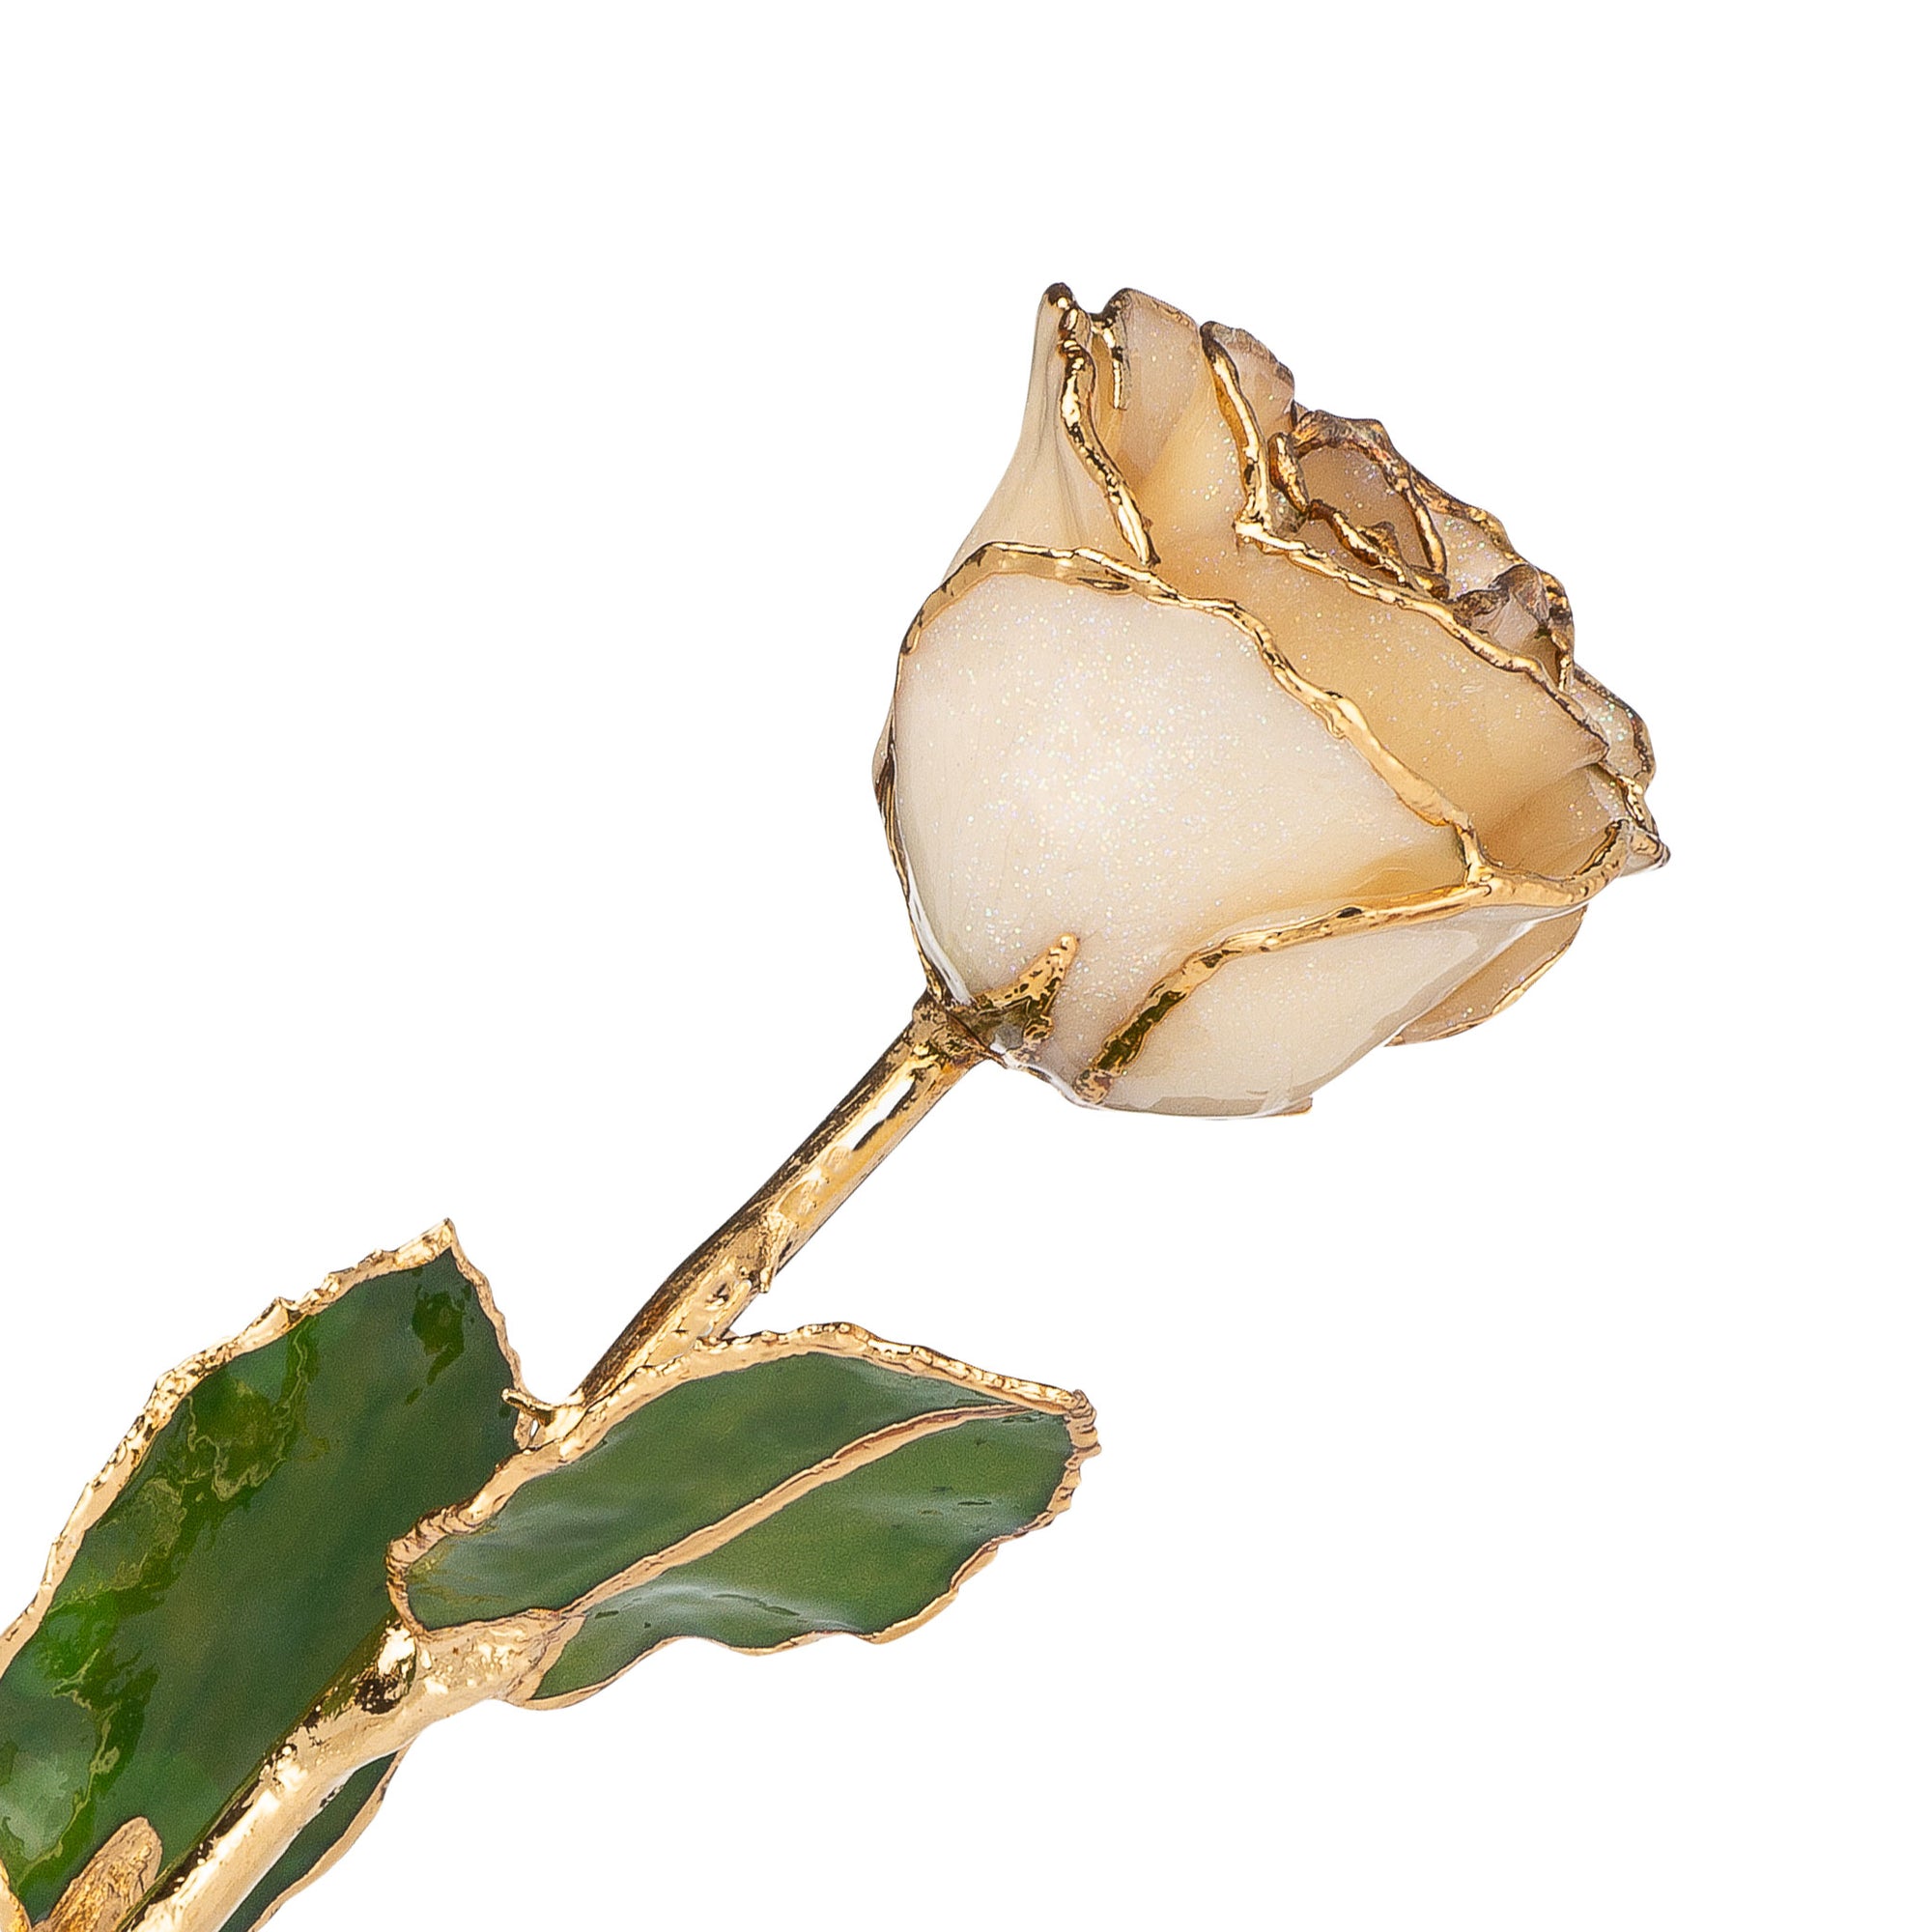 24K Gold Rose Flower / Amazon Com Gold Rose 24k Artificial Flowers ...